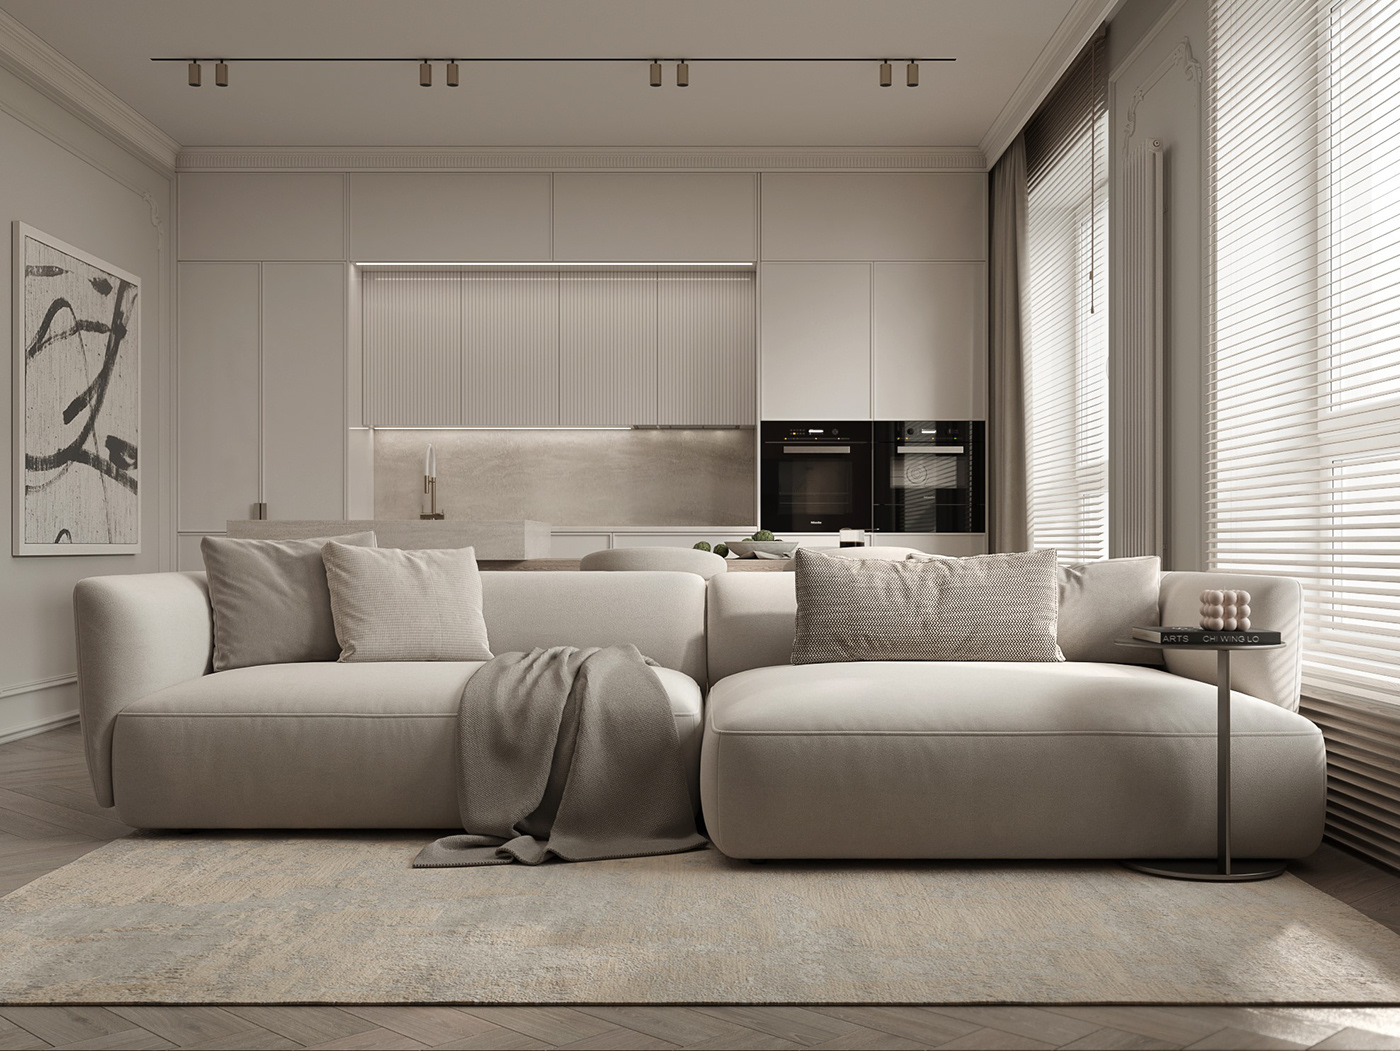 corona corona render  design Interior interior design  luxury minimalist minimalistic modern visualization